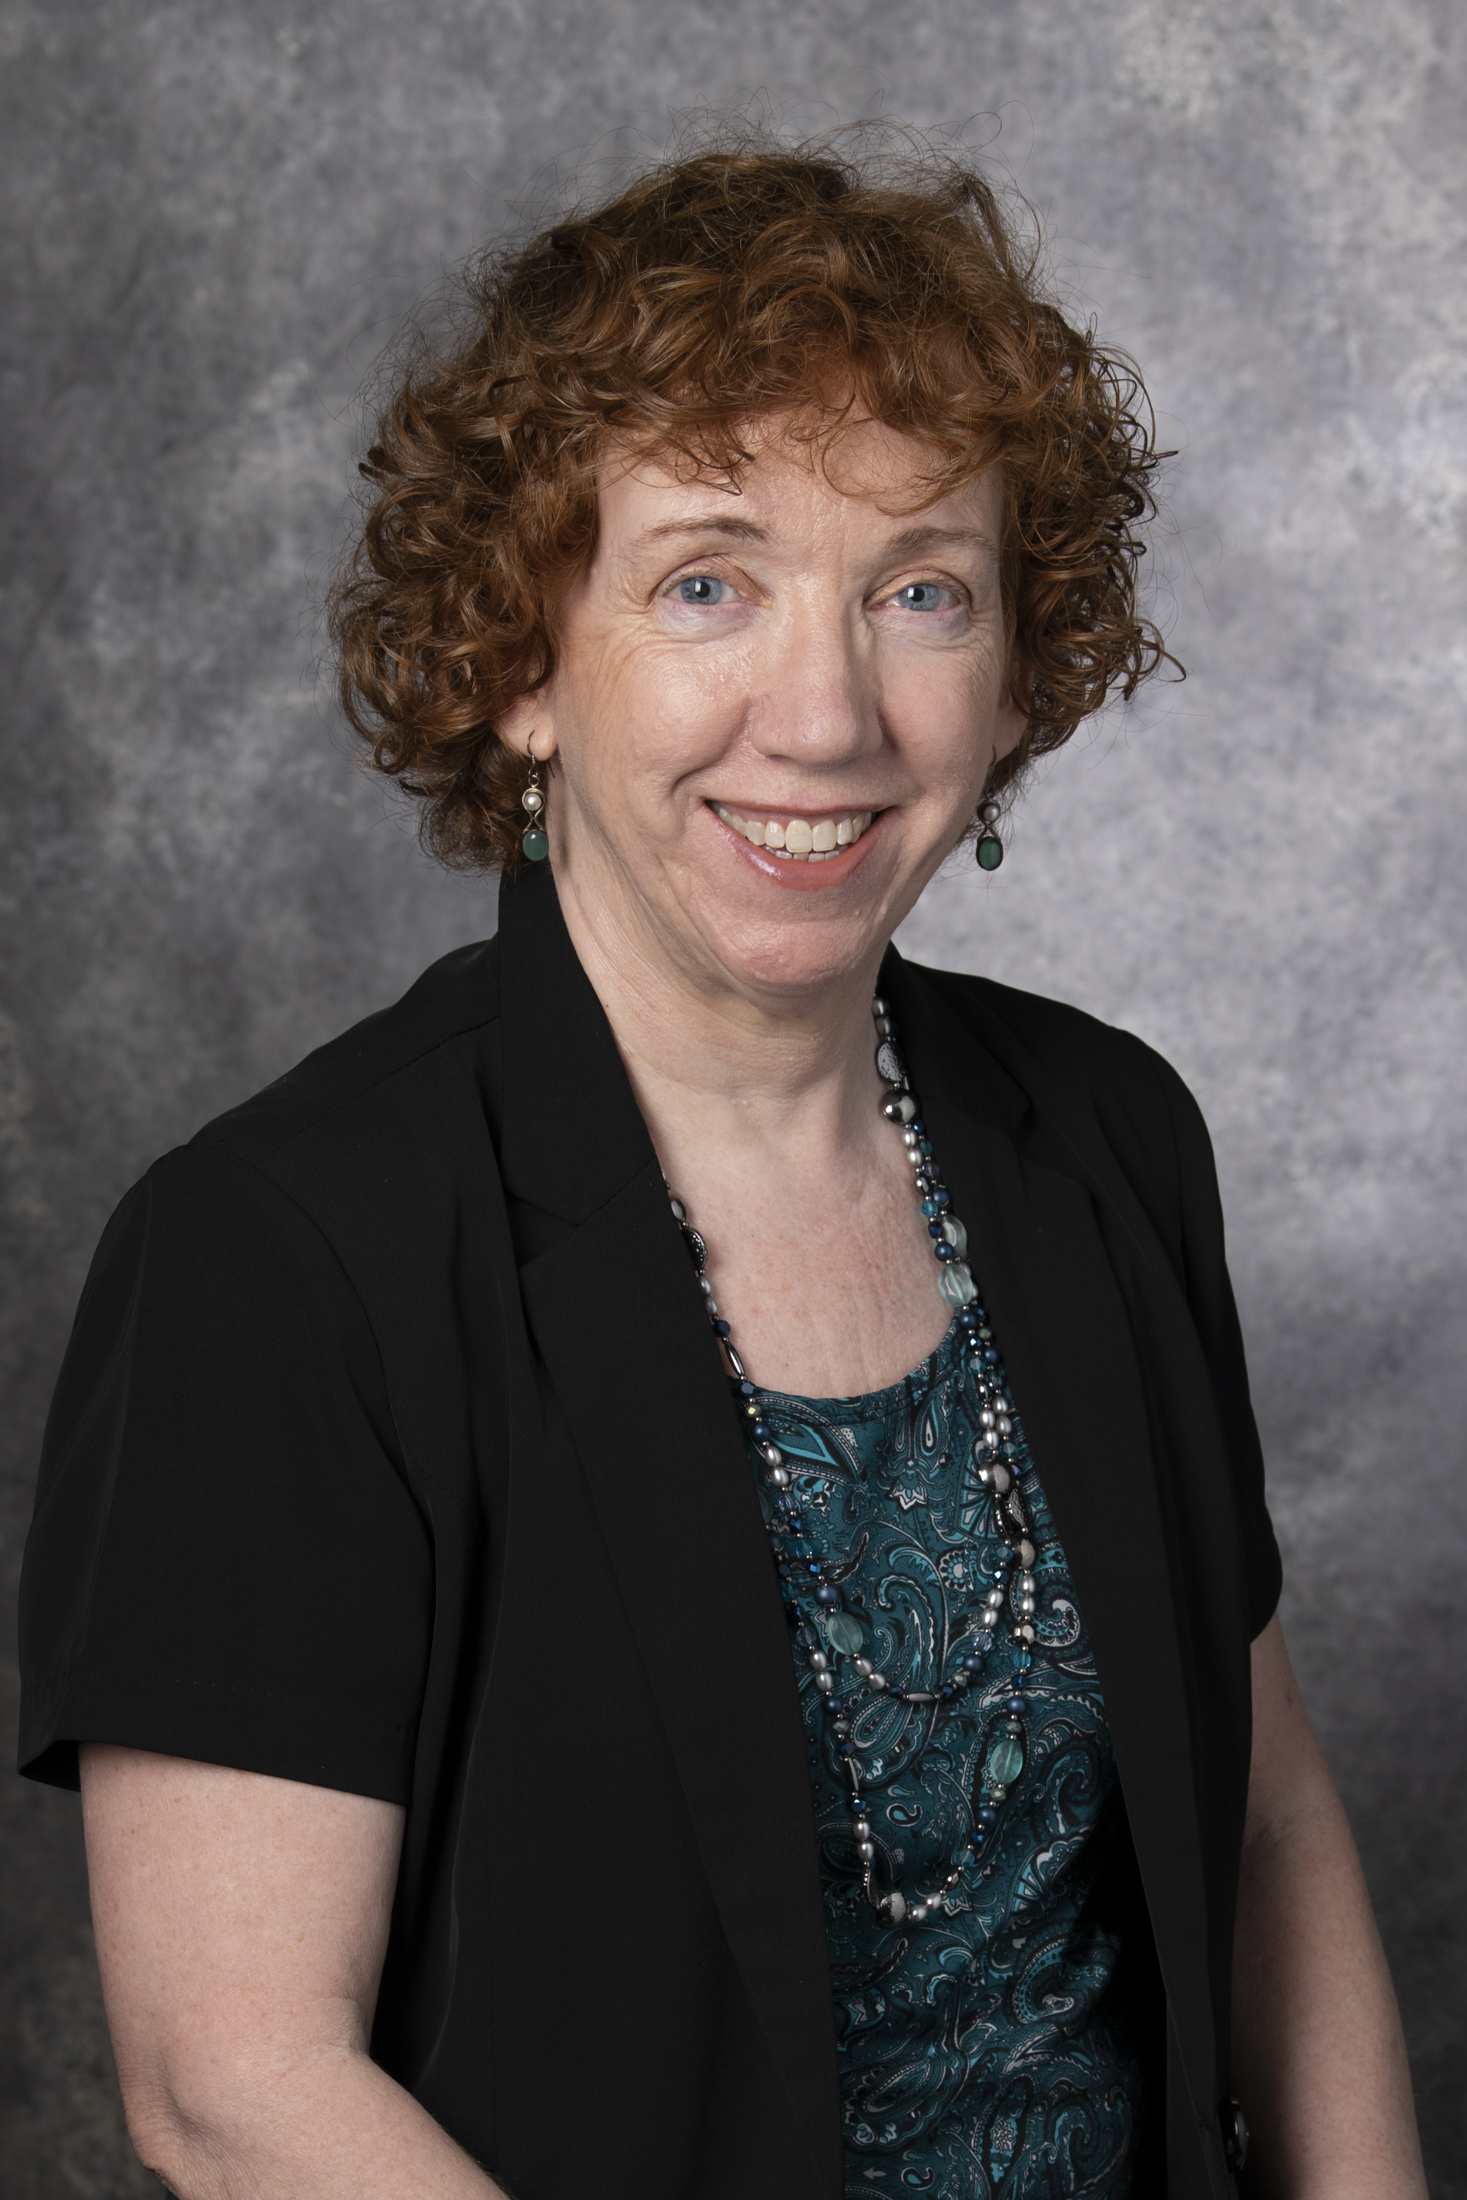 A headshot of Barbara Minsker, a member of the Lyle School of Engineering Faculty.